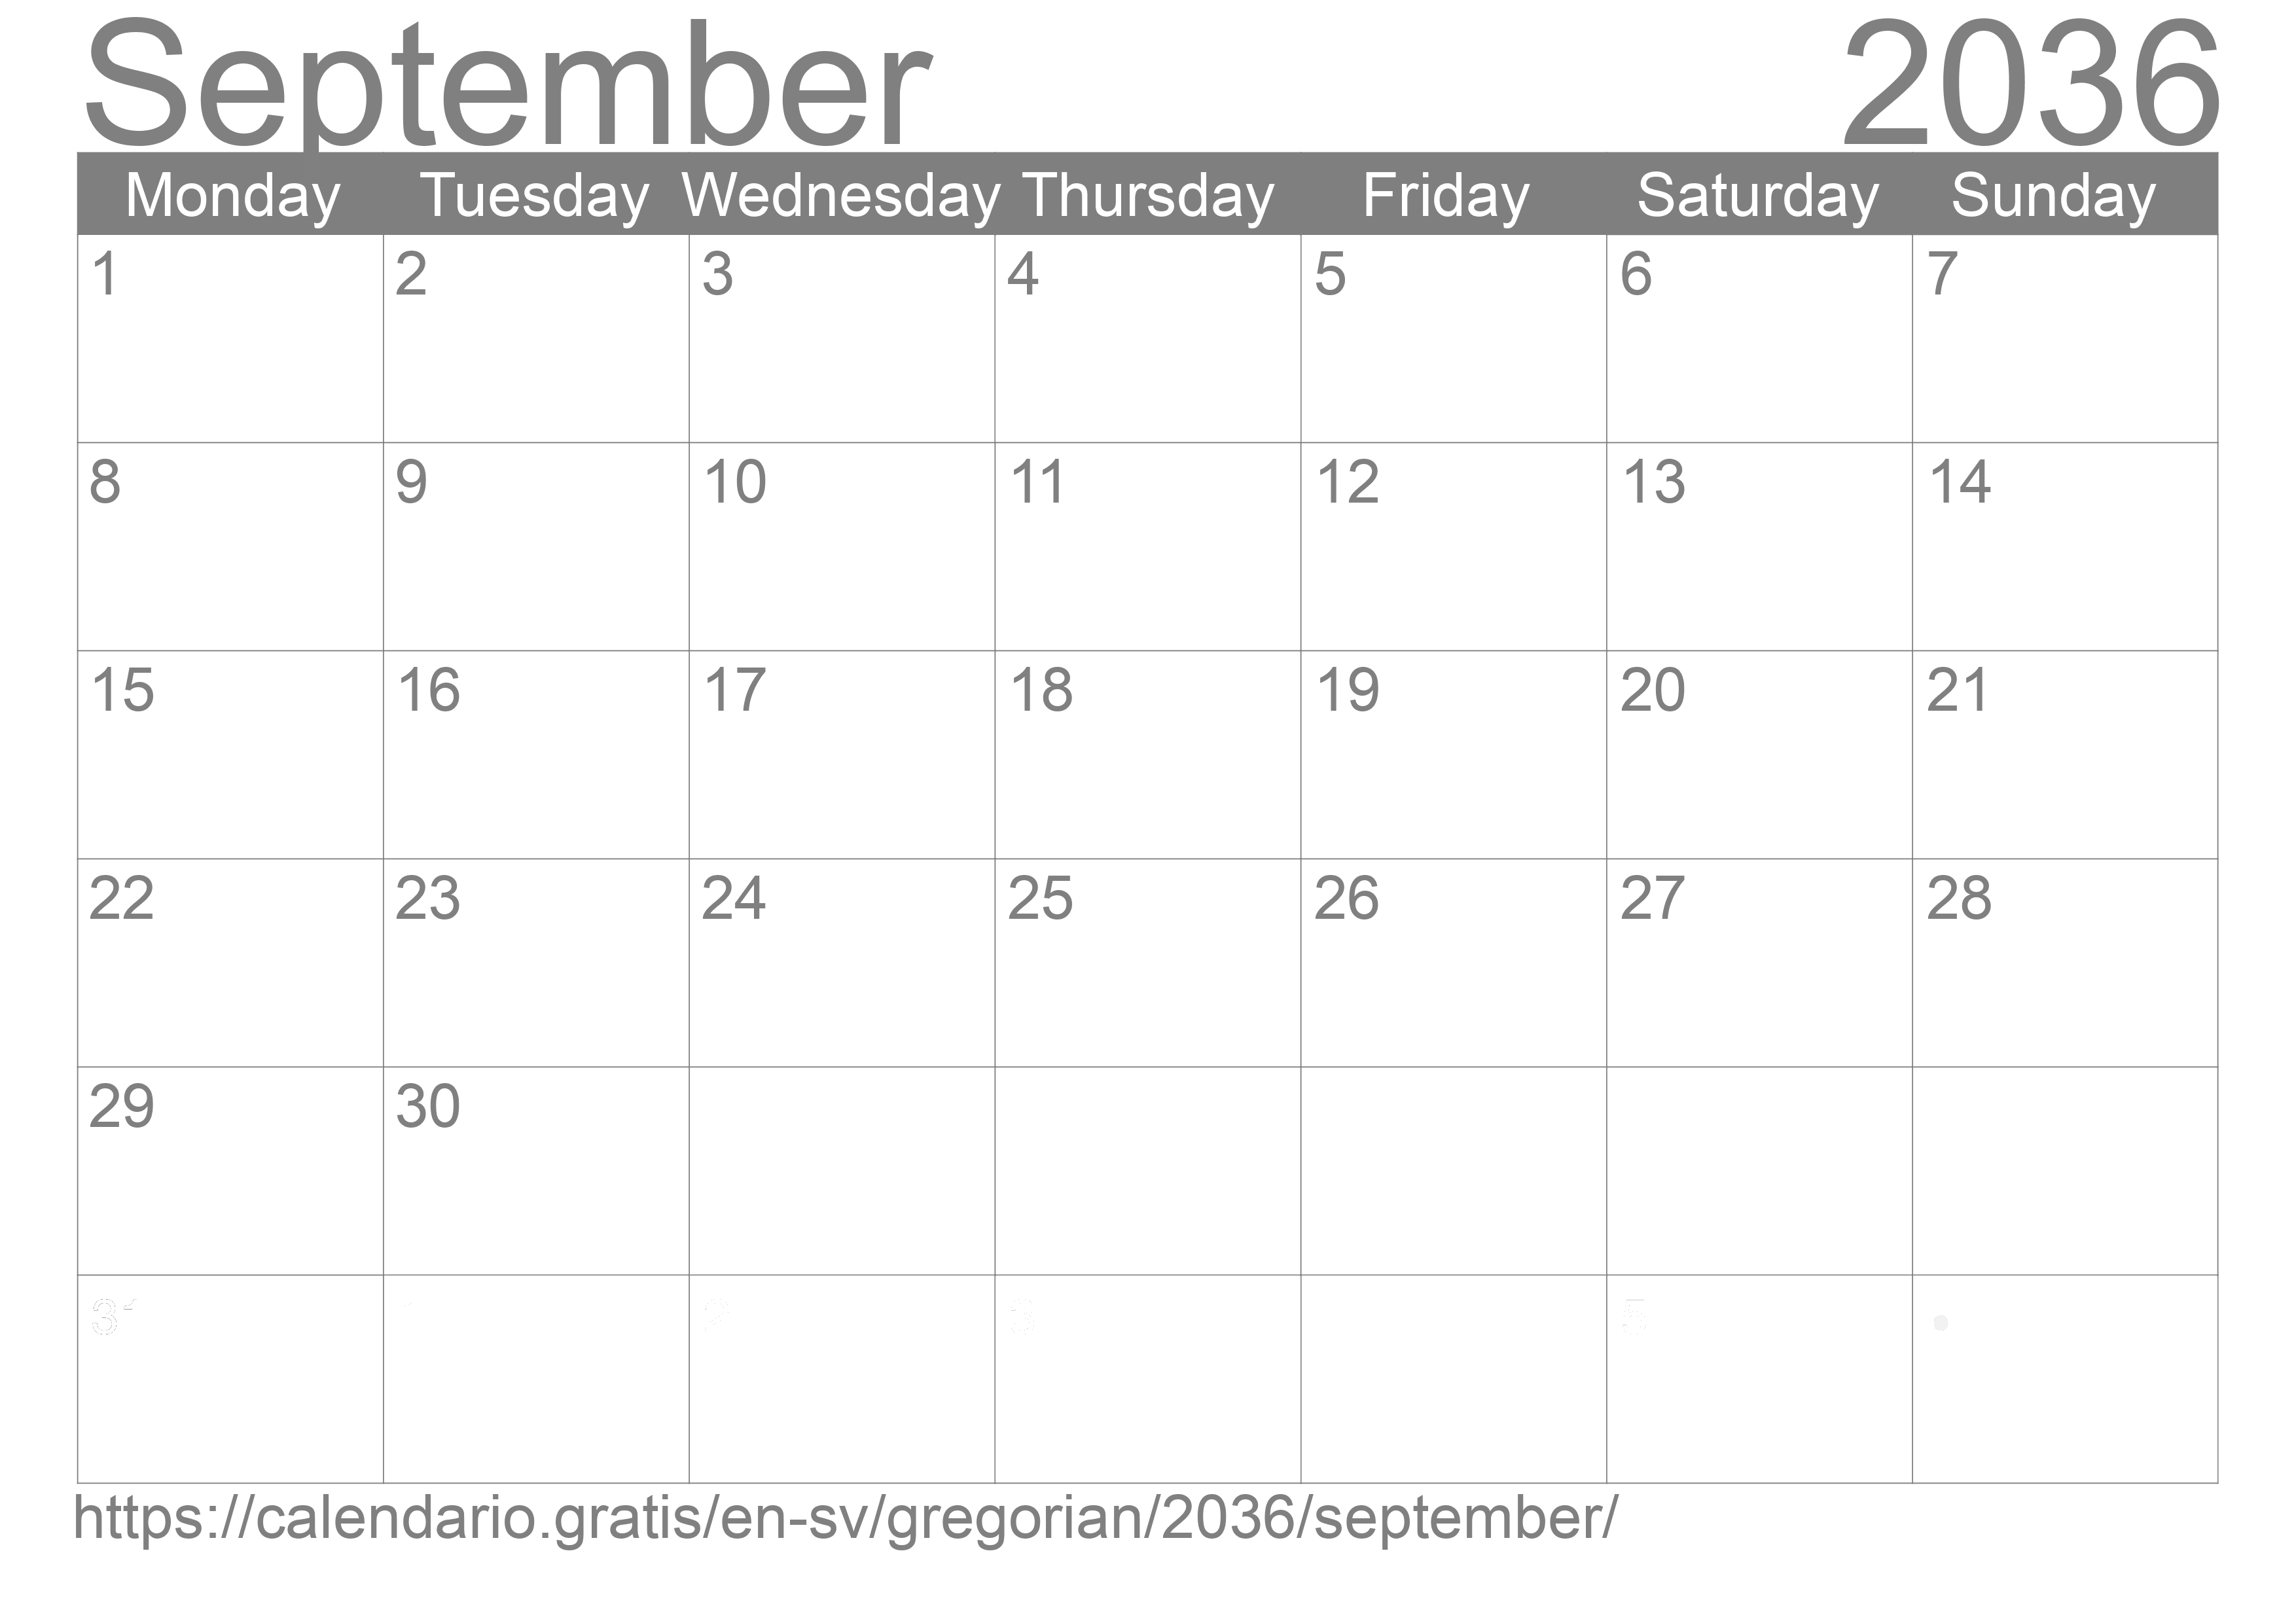 Calendar September 2036 to print